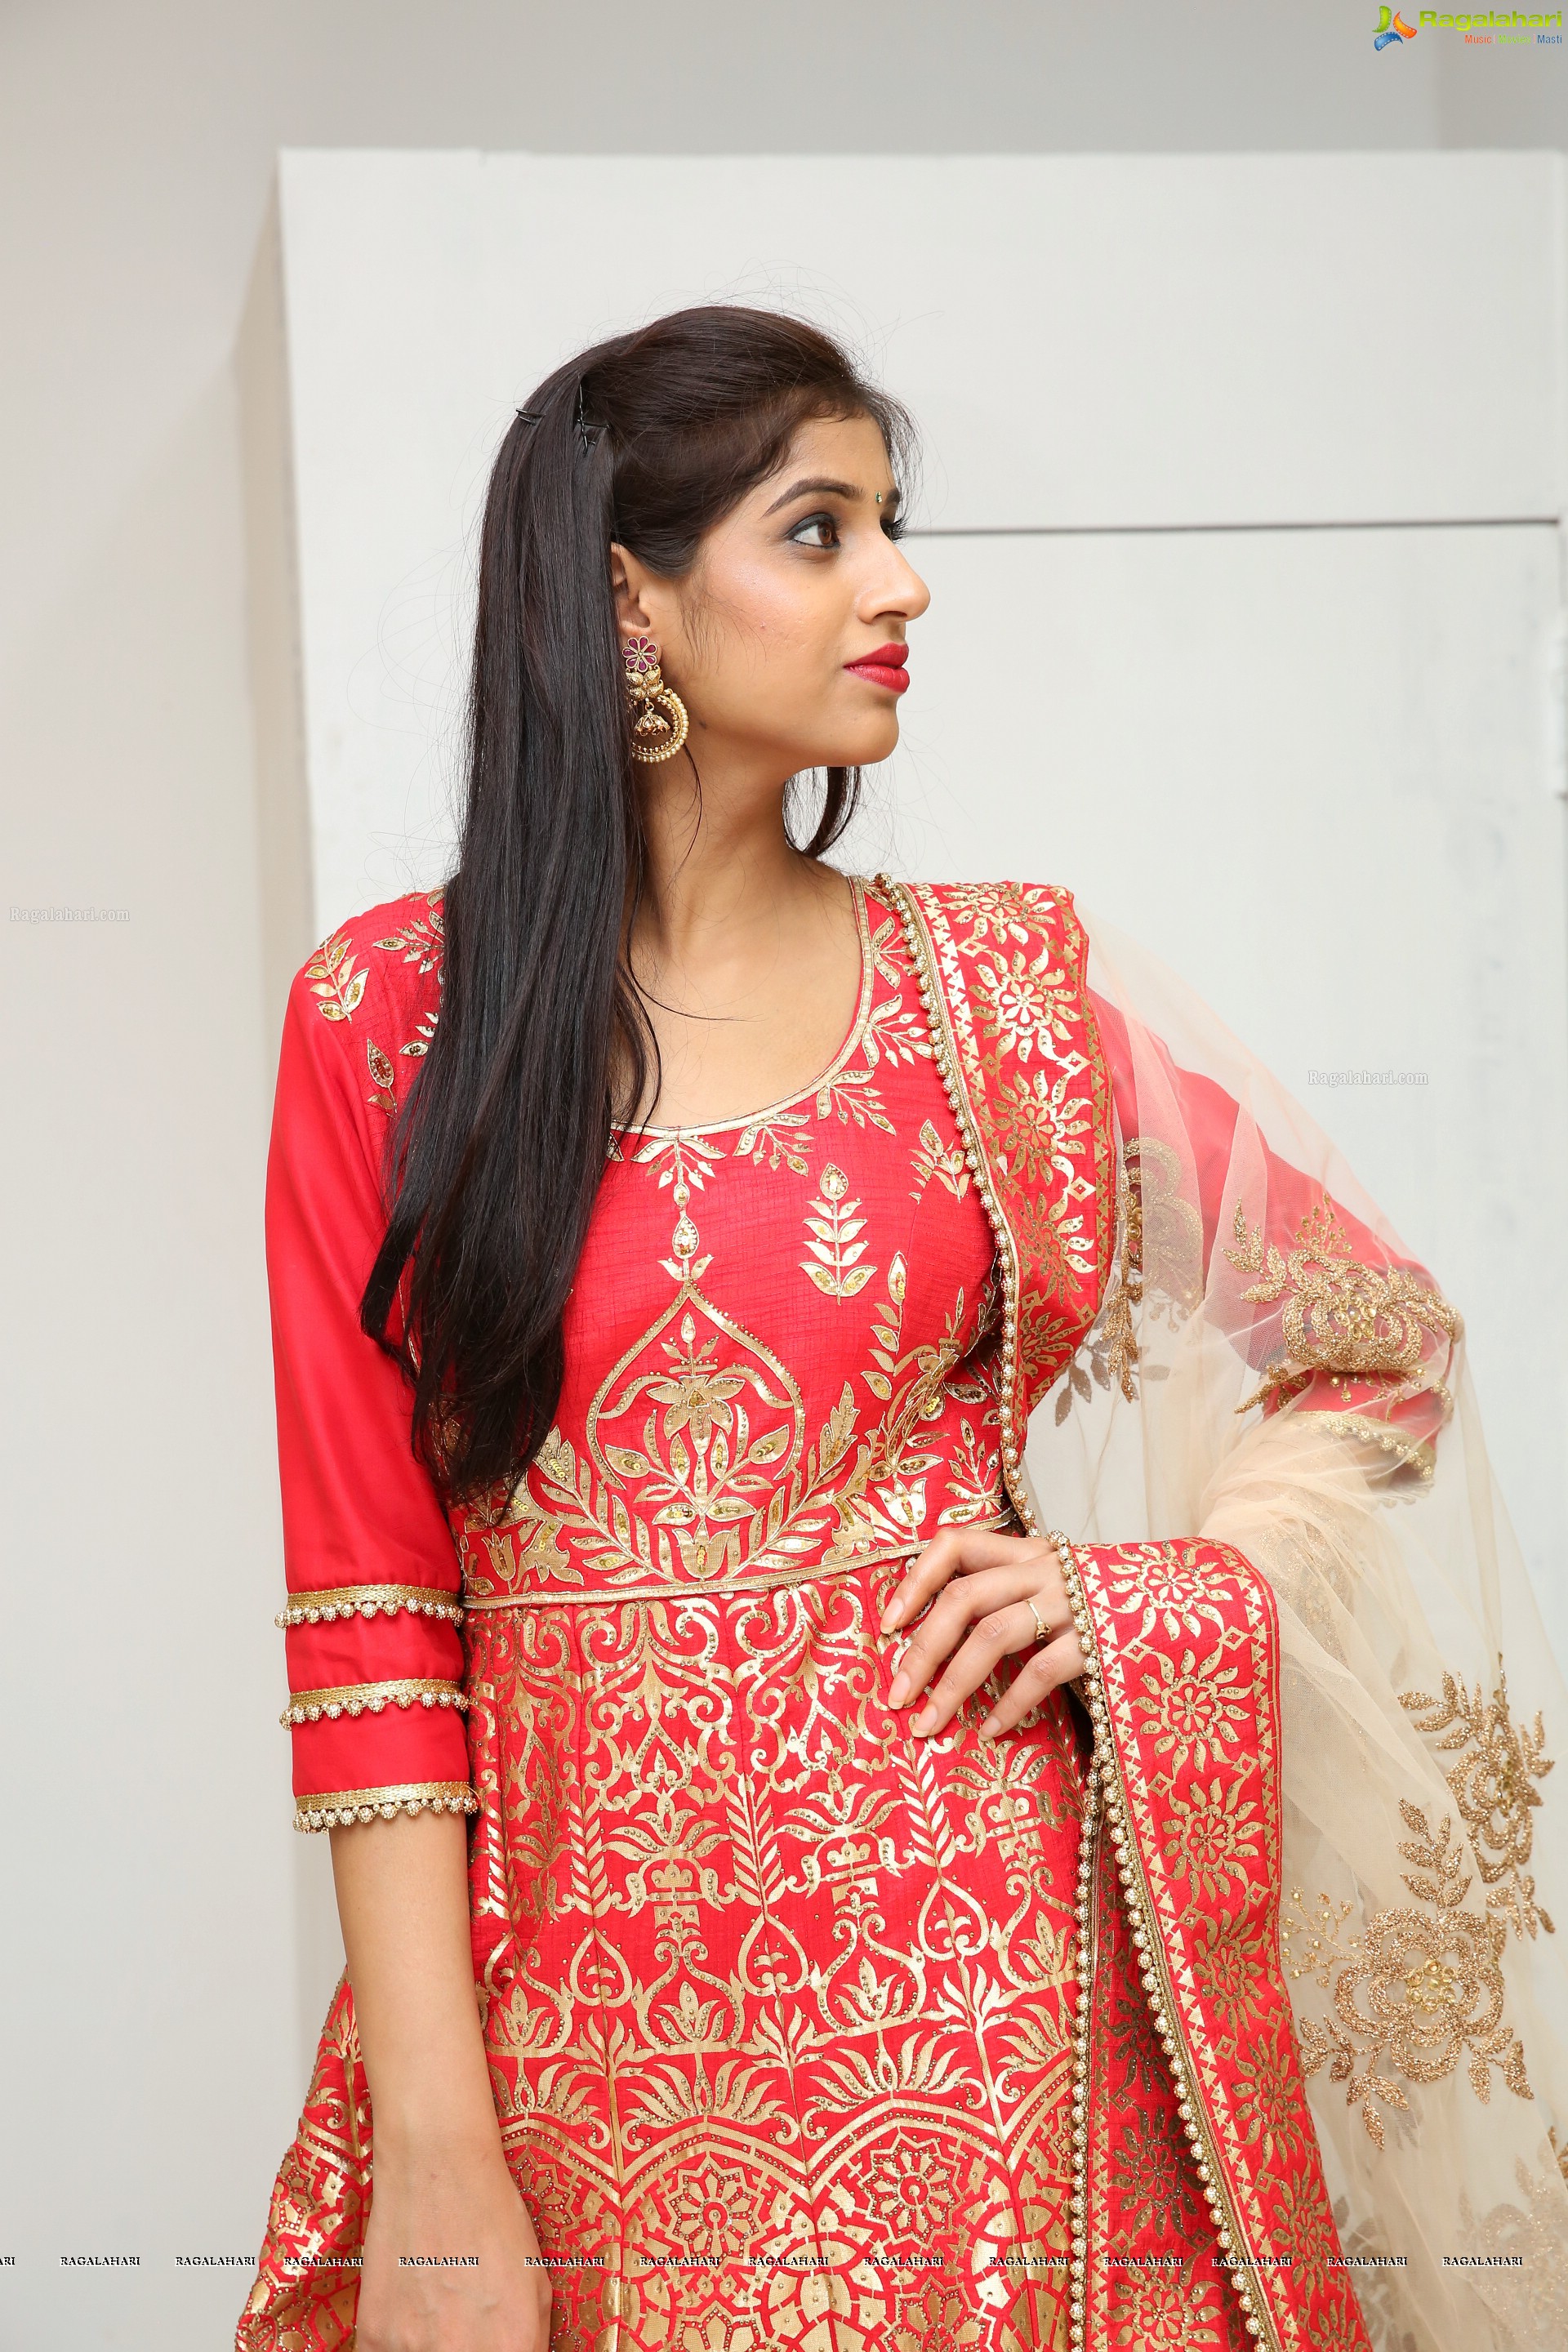 Naziya Khan at Trisha Boutique (High Definition)